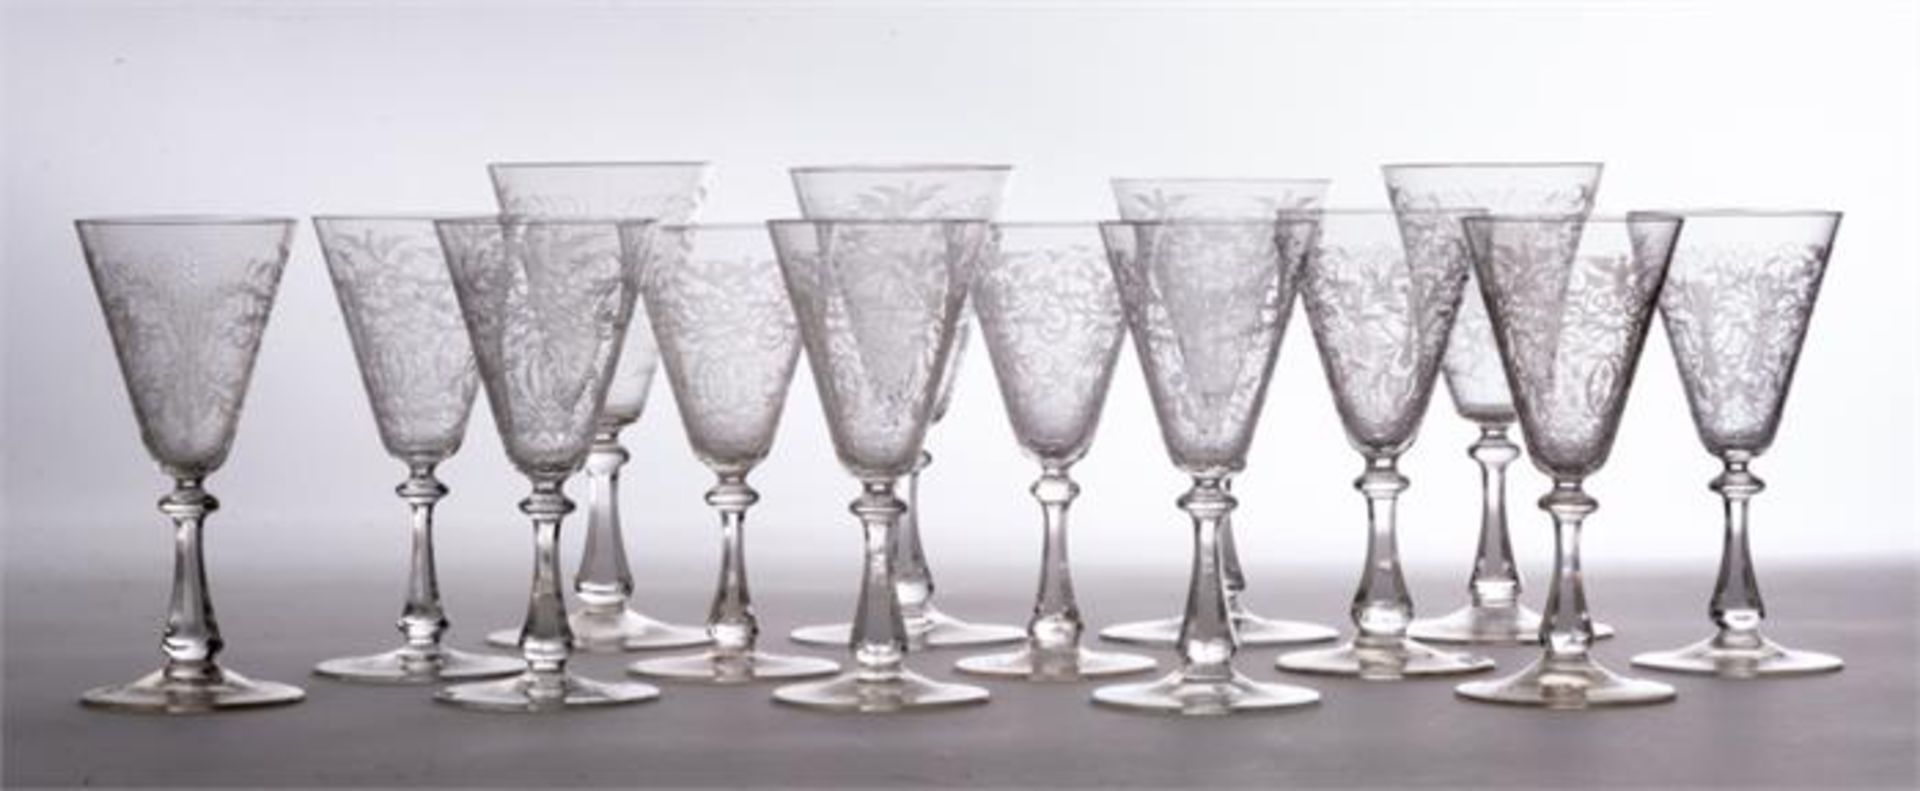 14 LIQUEUR GLASSES BY LOBMEYER